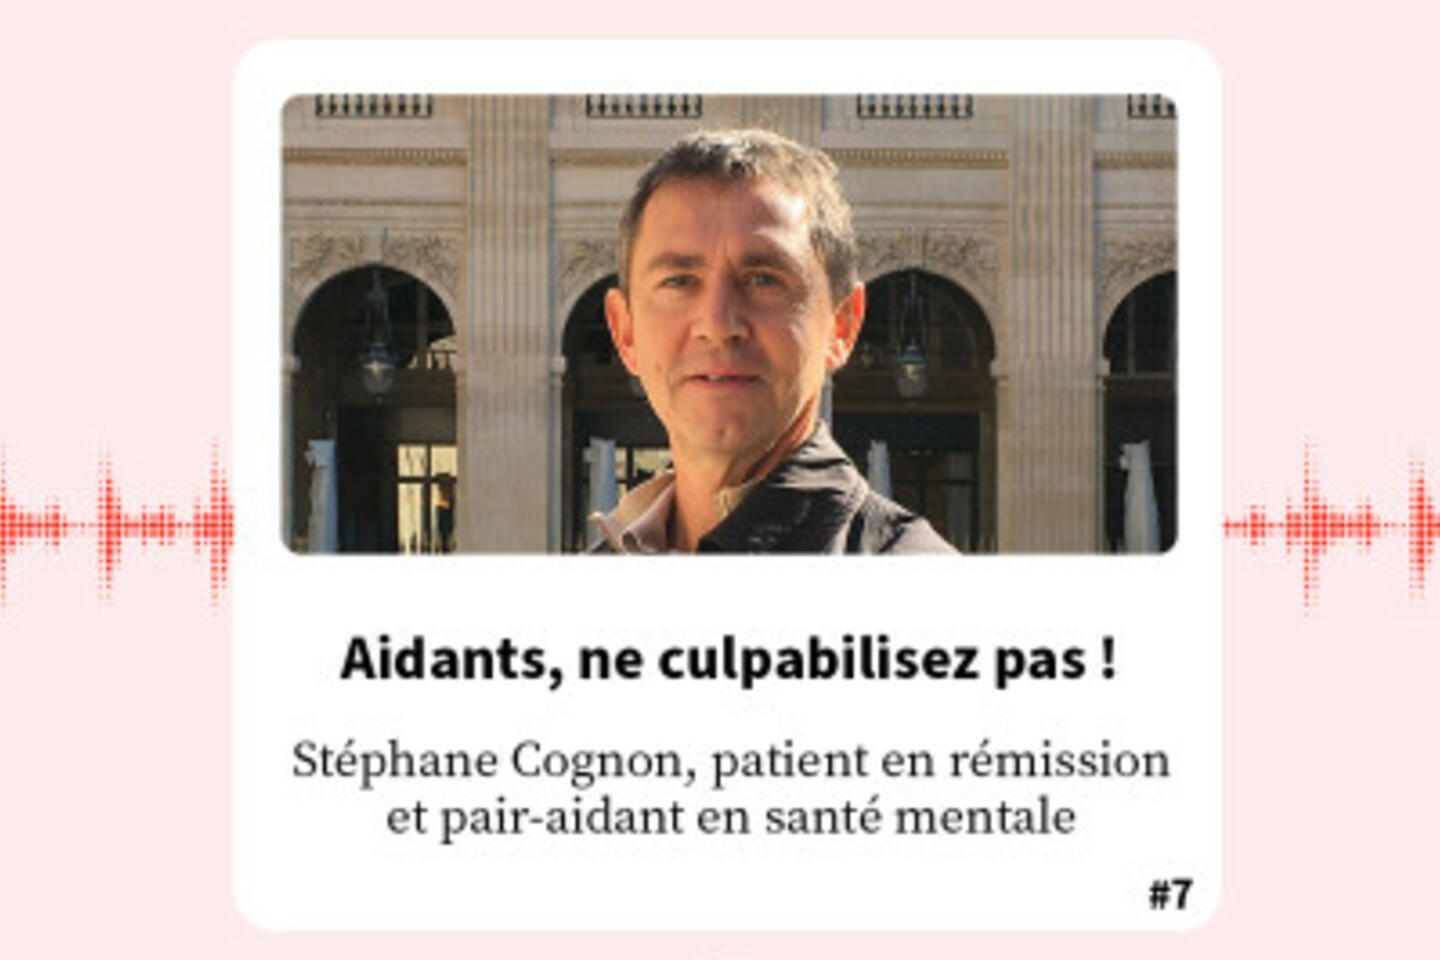 FondaMental Talk - Podcast, Stéphane Cognon : "Aidants, ne culpabilisez pas !"